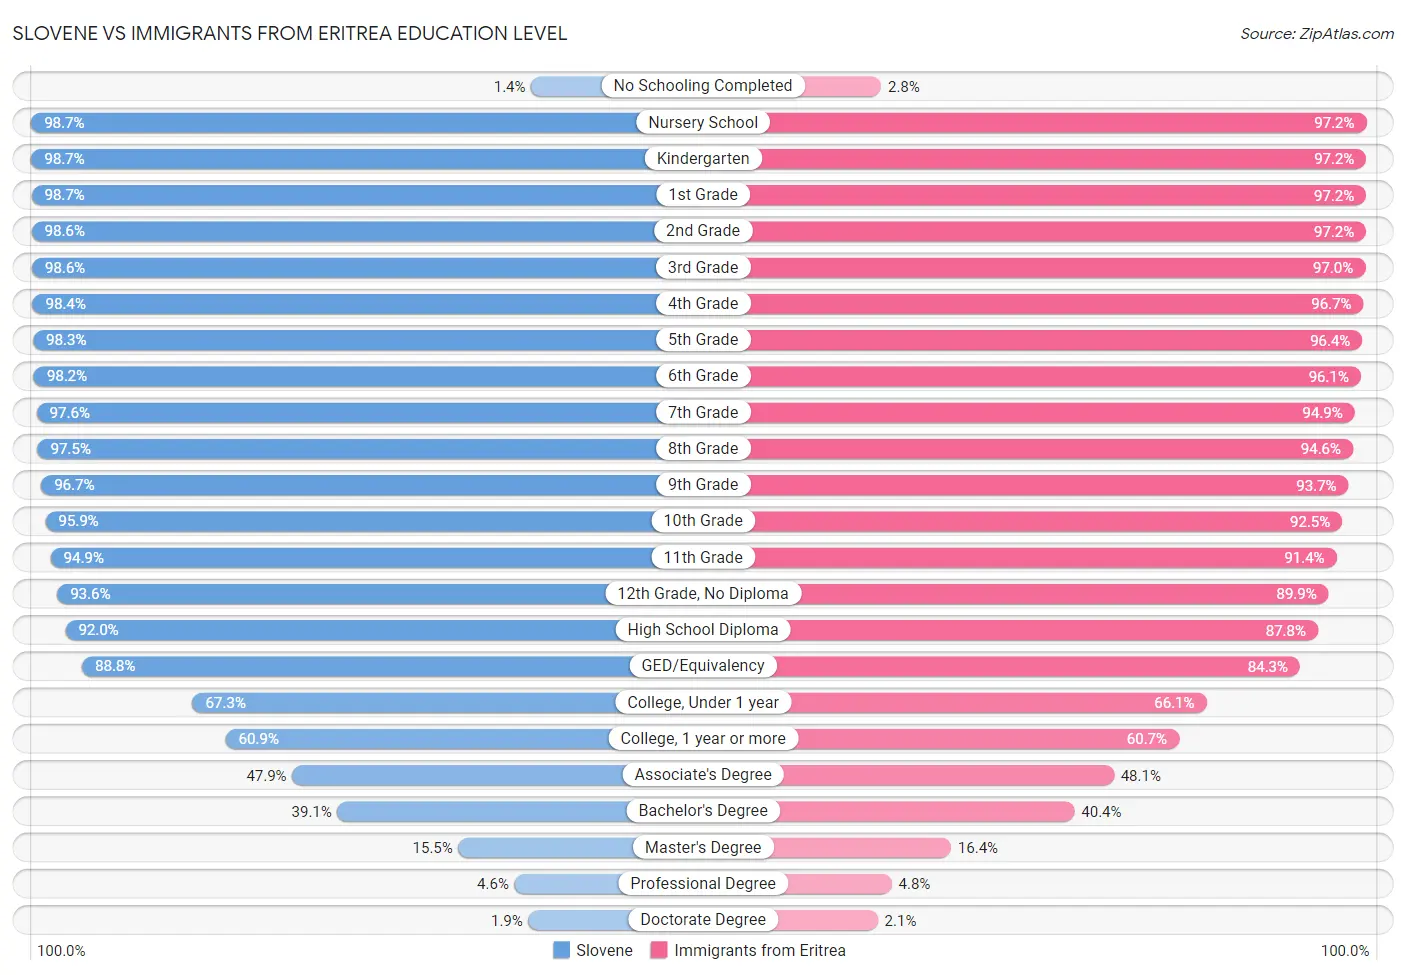 Slovene vs Immigrants from Eritrea Education Level